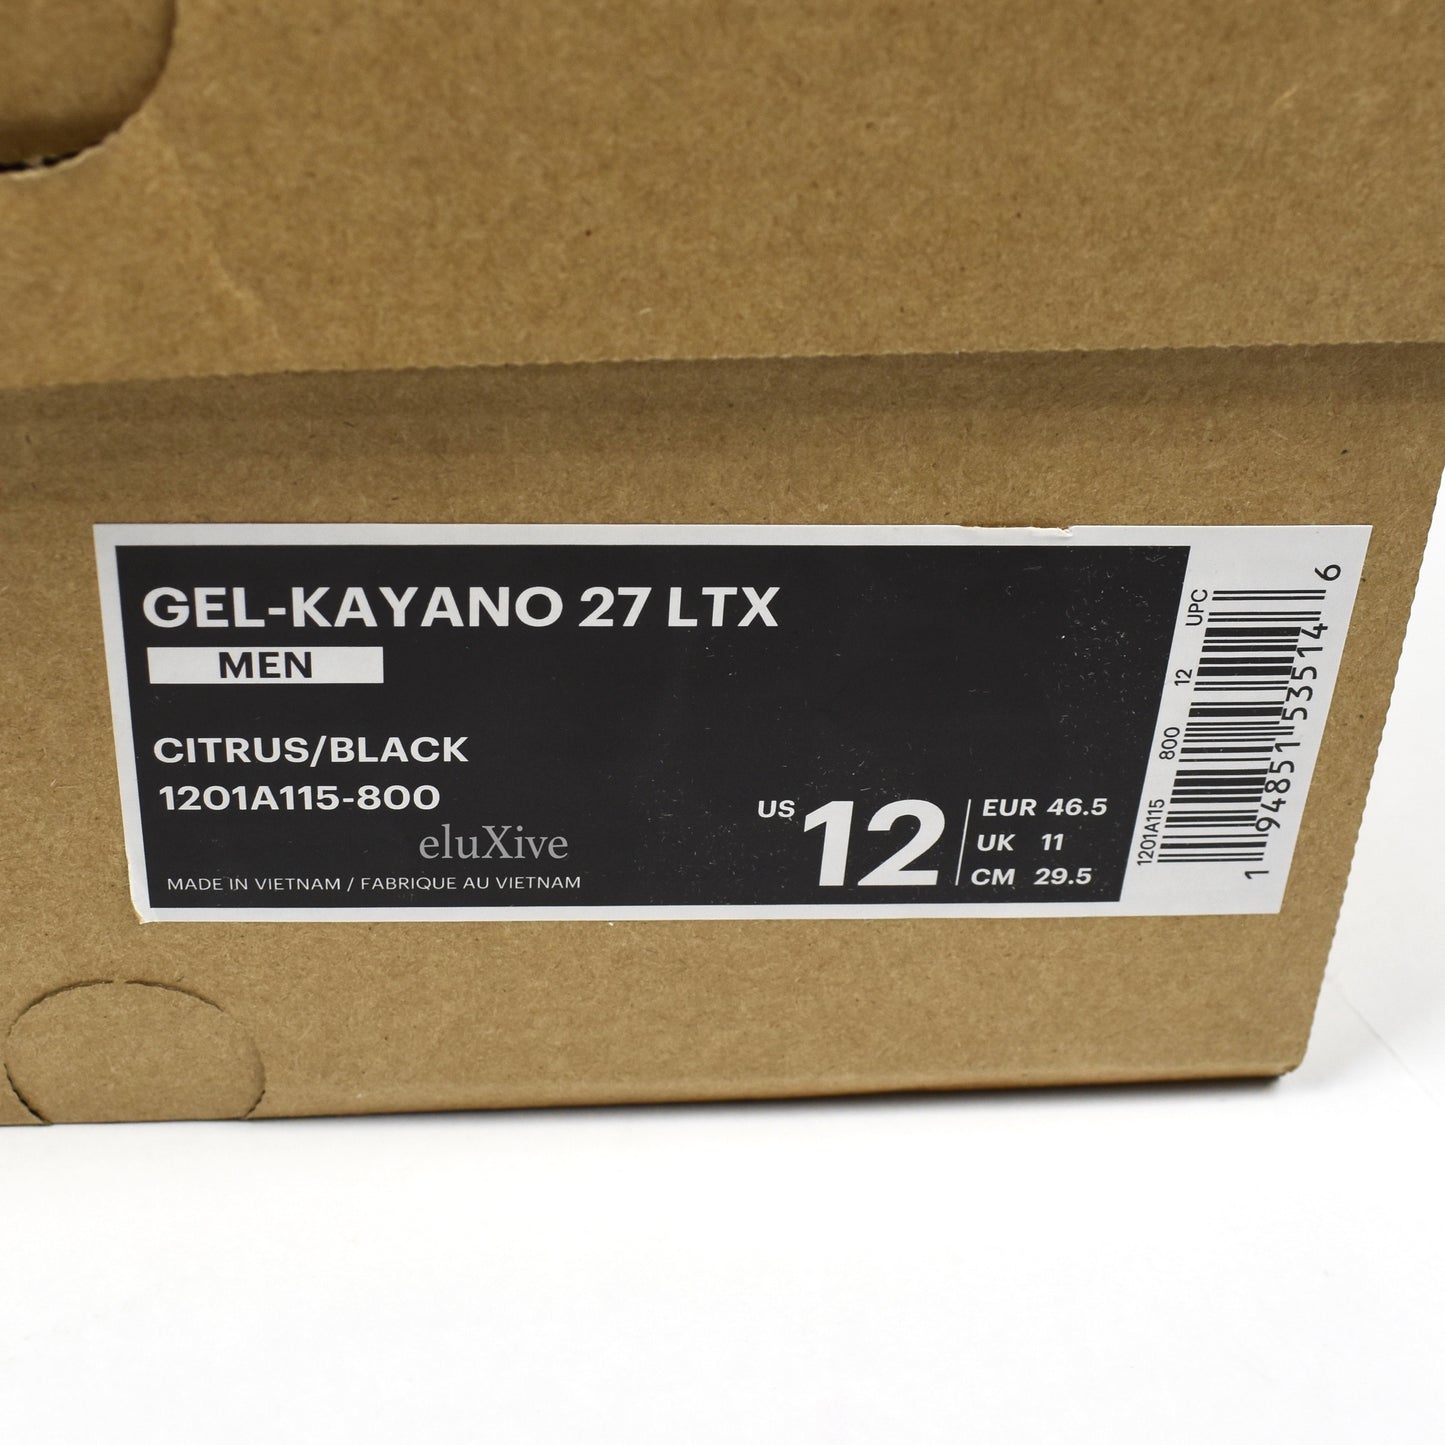 Asics x Vivienne Westwood - Gel-Kayano 27 LTX (Orange)